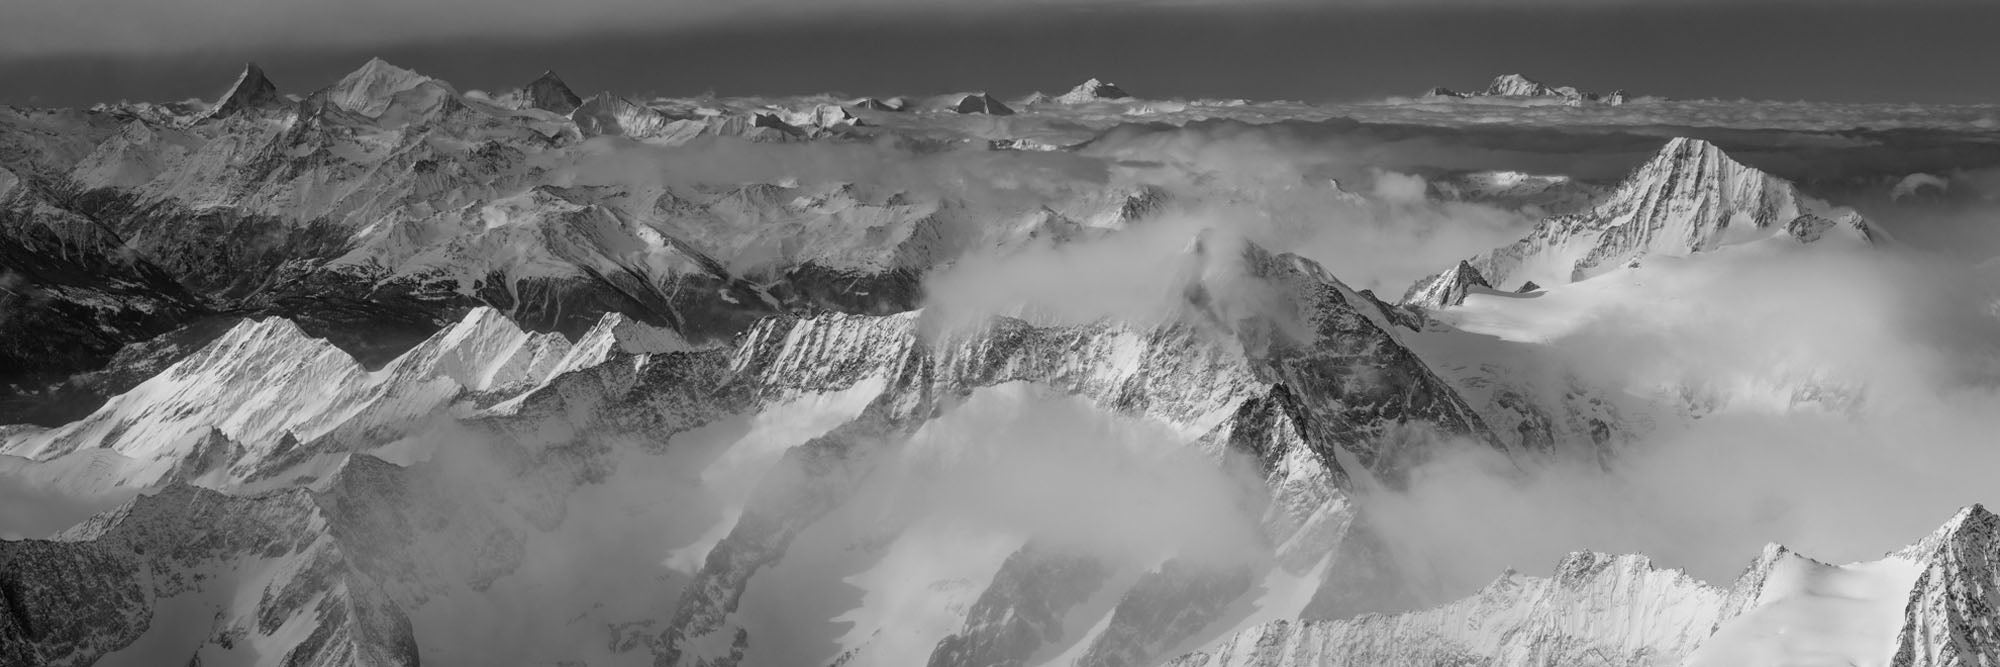 Les alpes vues des Bernese Alps, Switzerland No. 1.